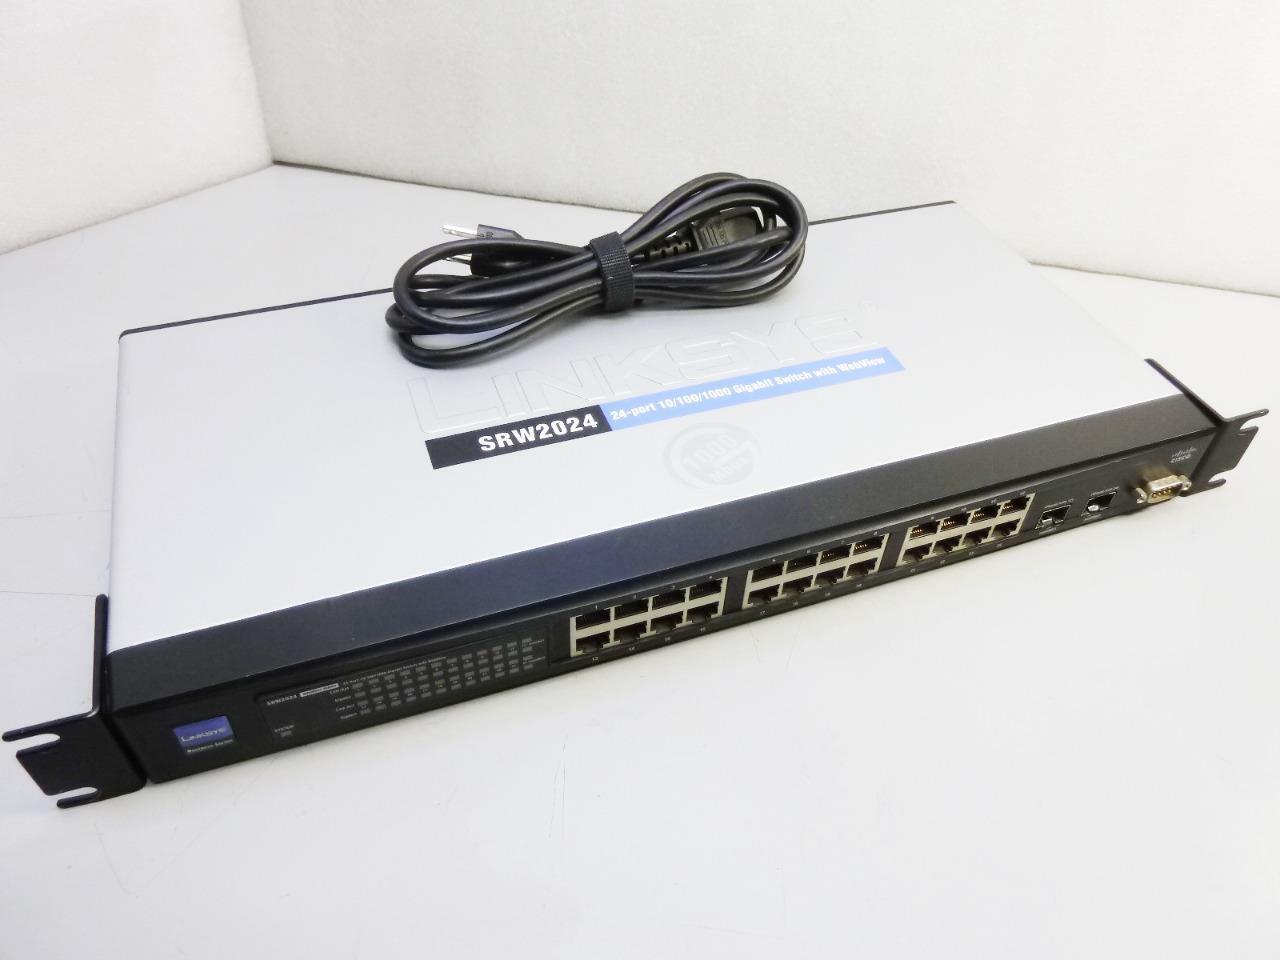 Cisco Systems Linksys SRW2024 Ver 1.3 24-Port 10/100/1000 Gigabit Switch WebView